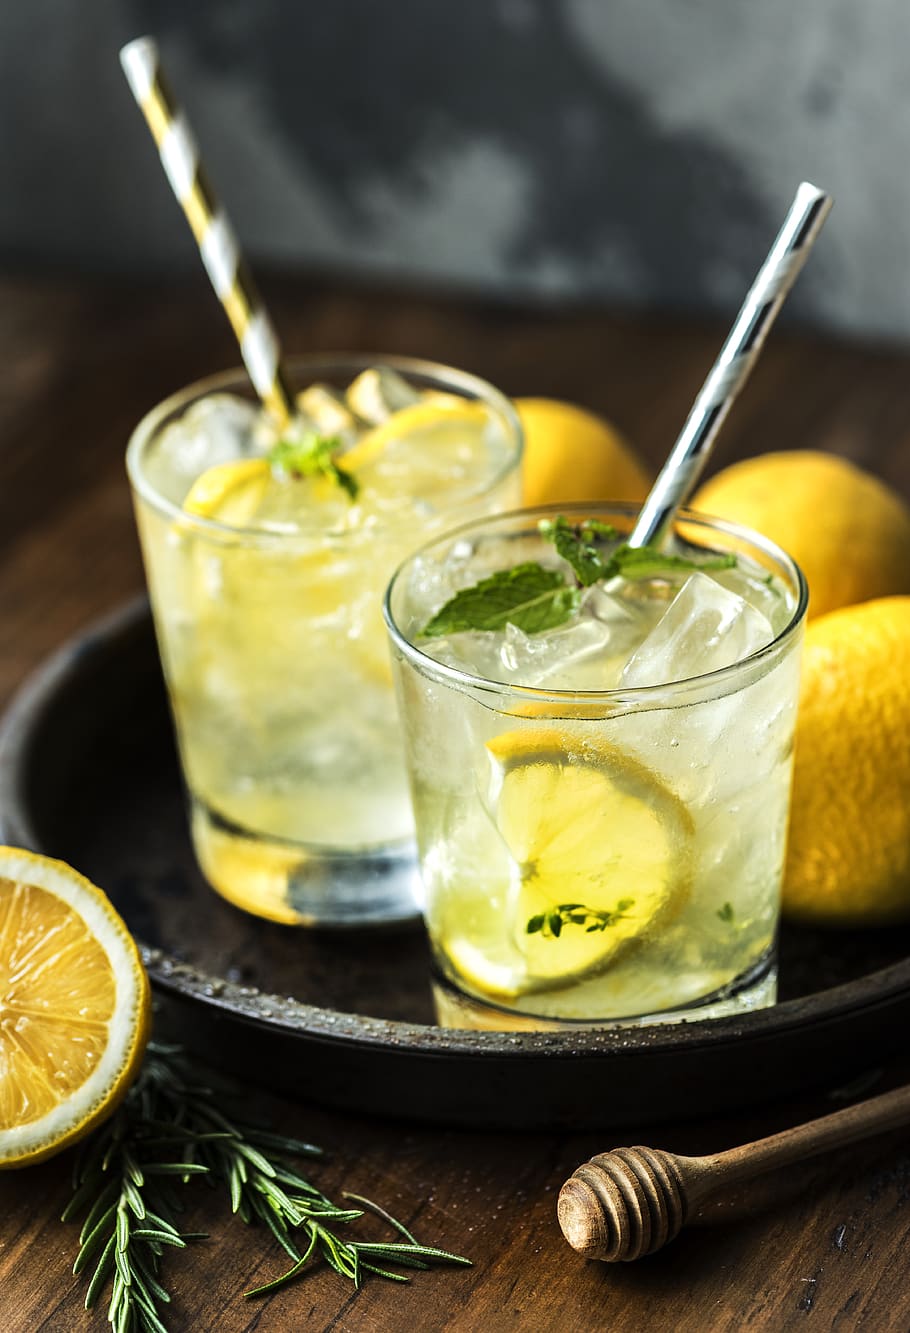 Two Shot Glasses Filled With Lemon Juice, beverage, citrus, close-up